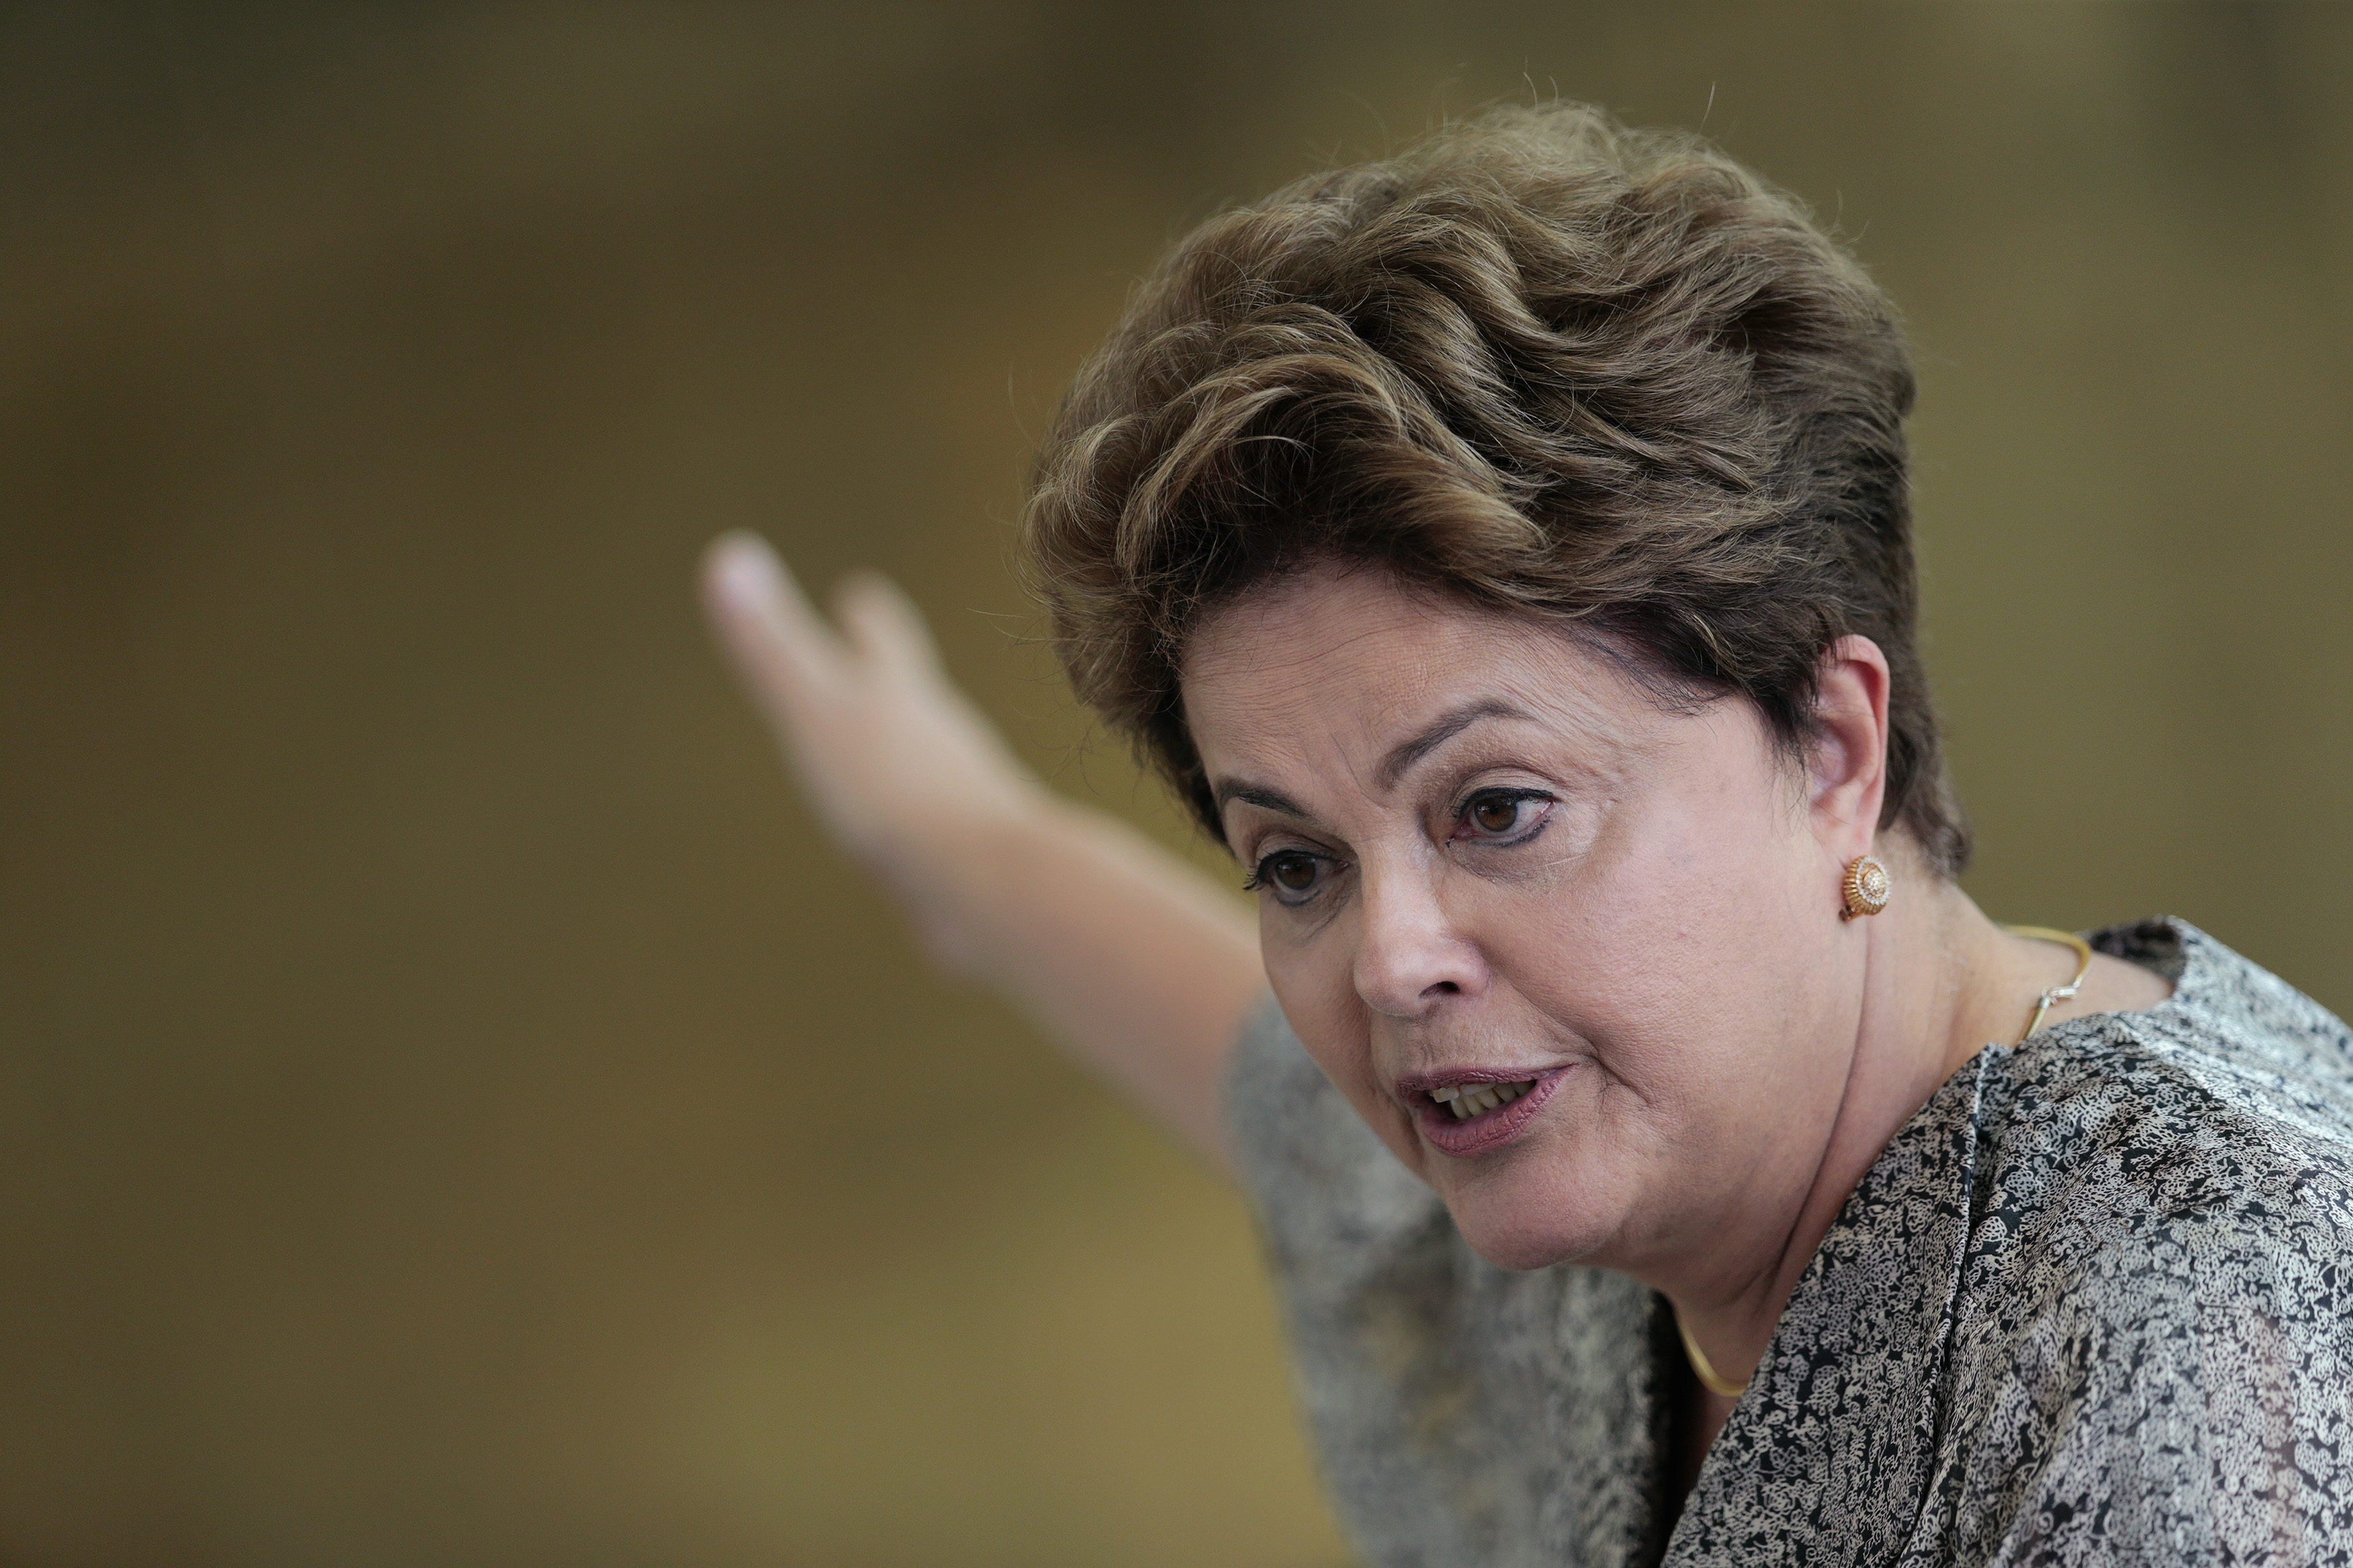 Rousseff califica de intento de “golpe” uso político de caso Petrobras